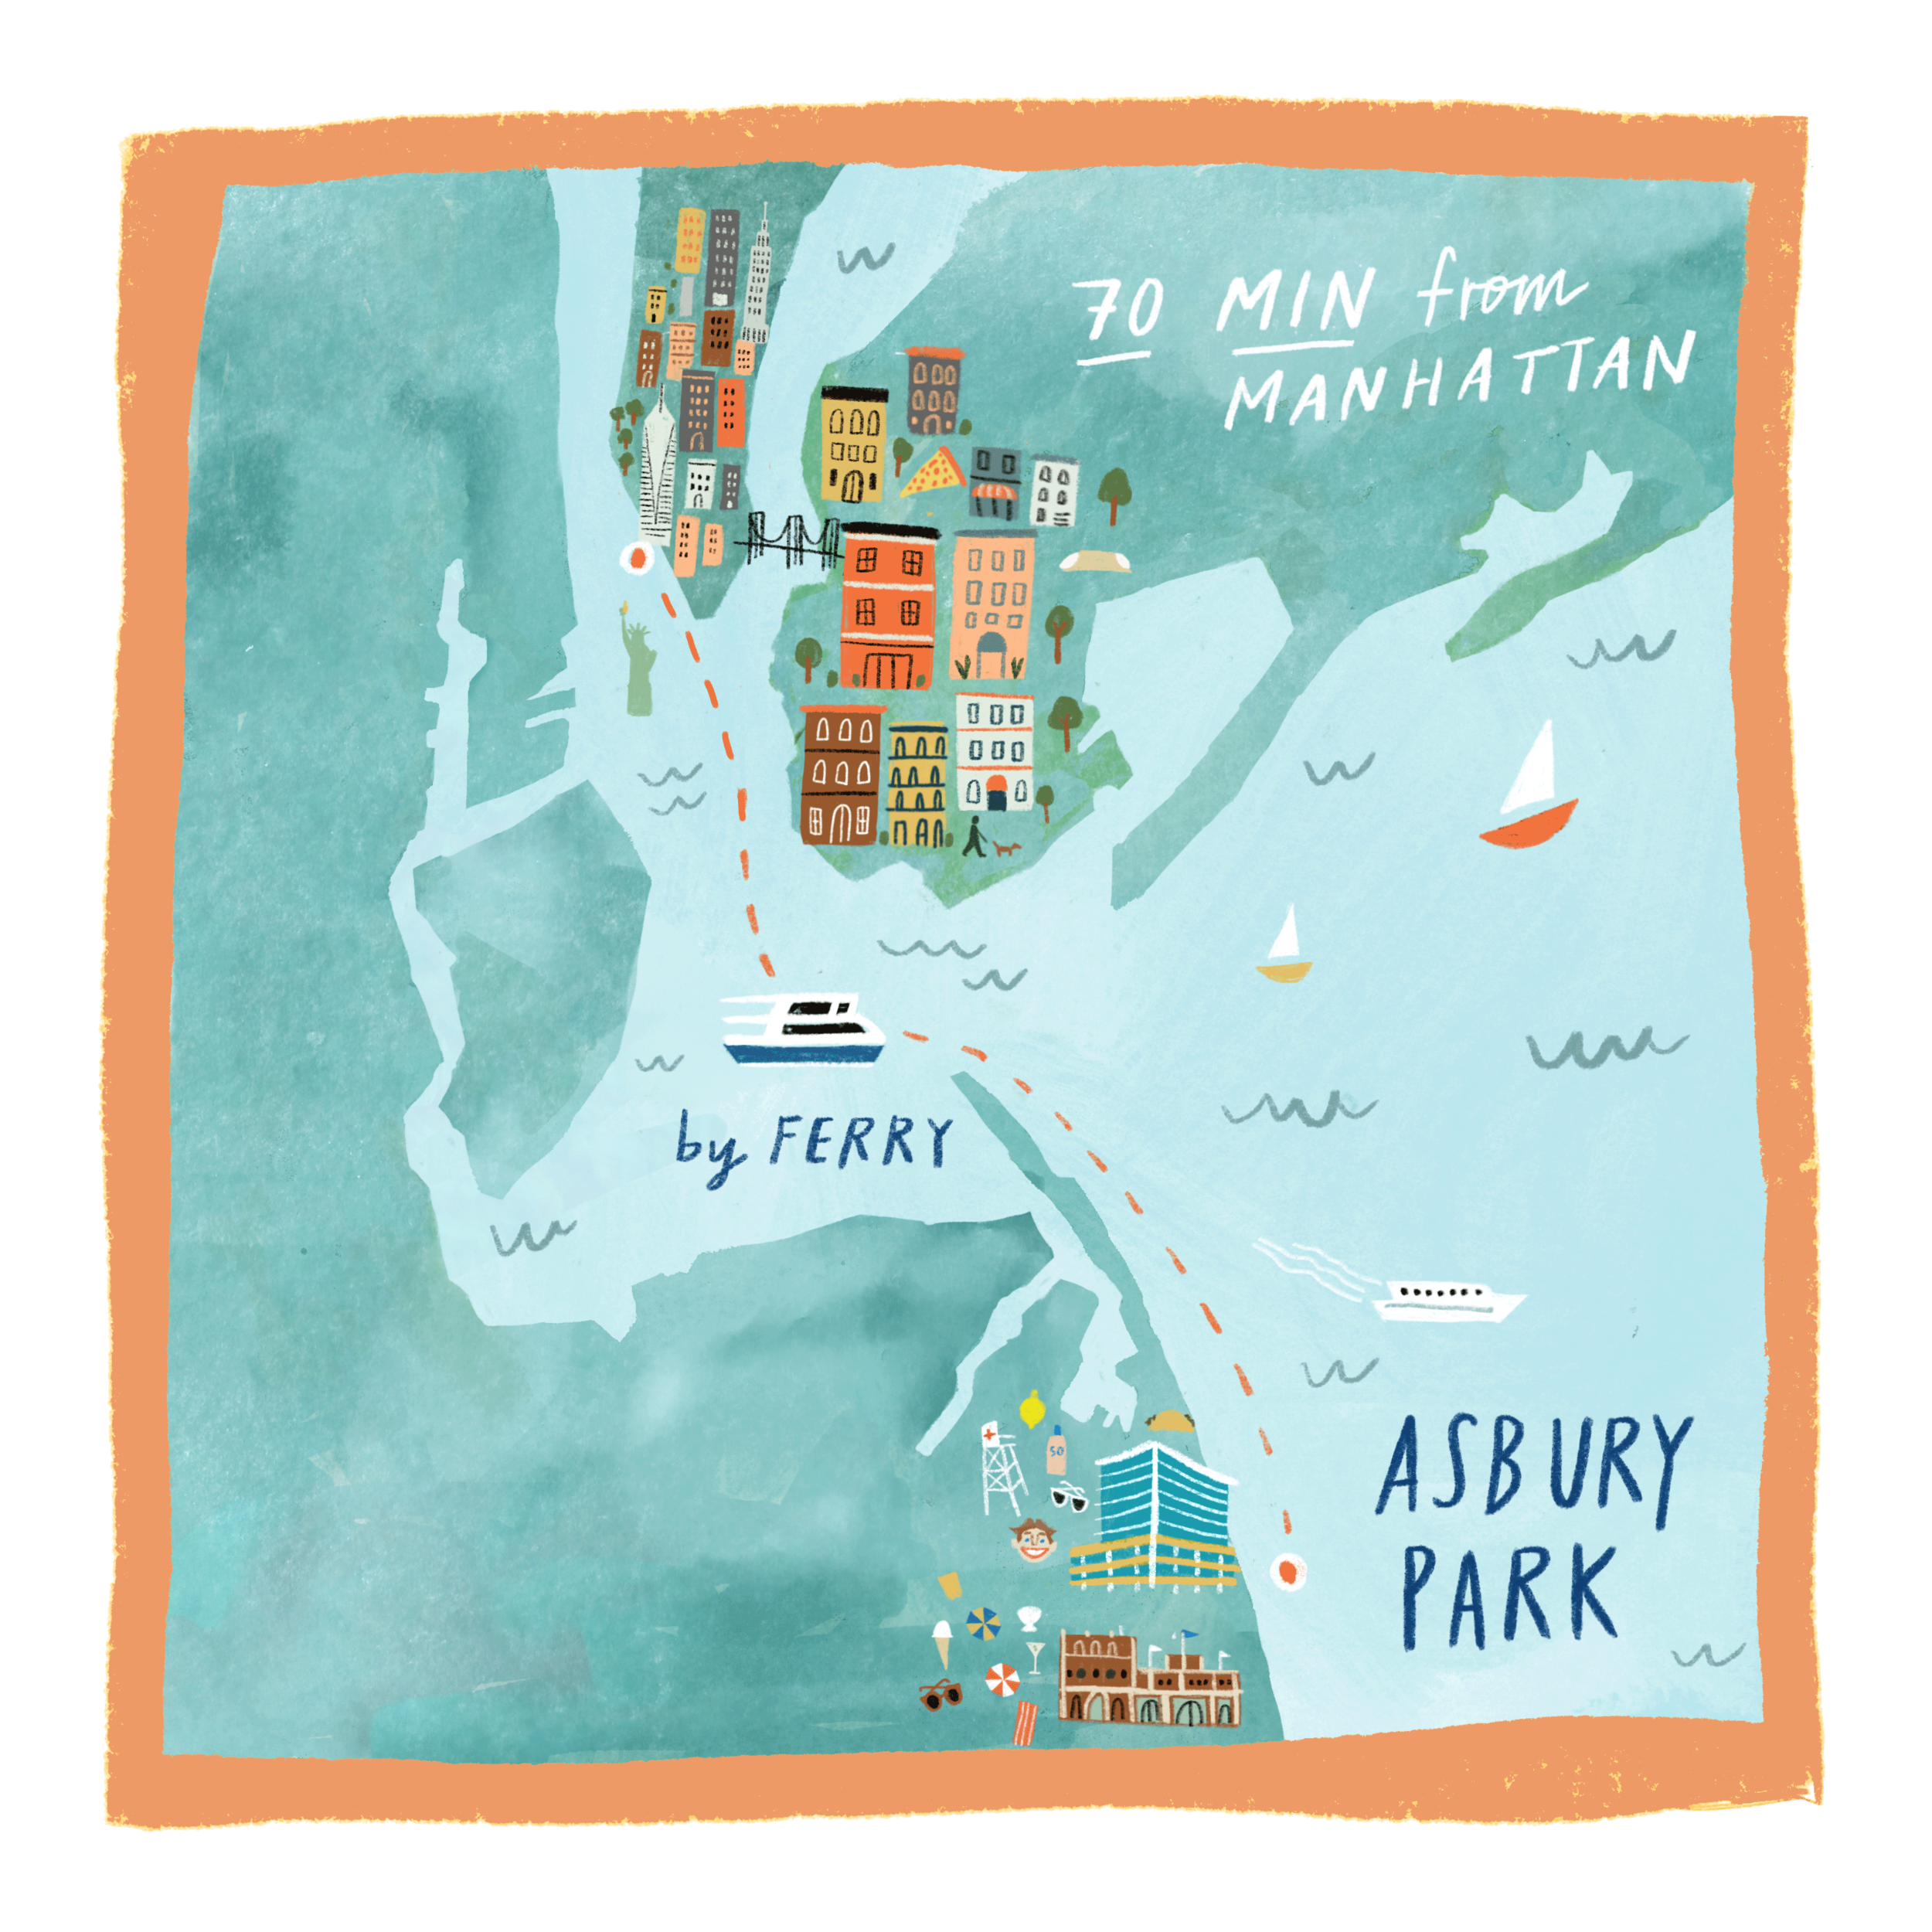 AsburyPark_Map_FERRY.png